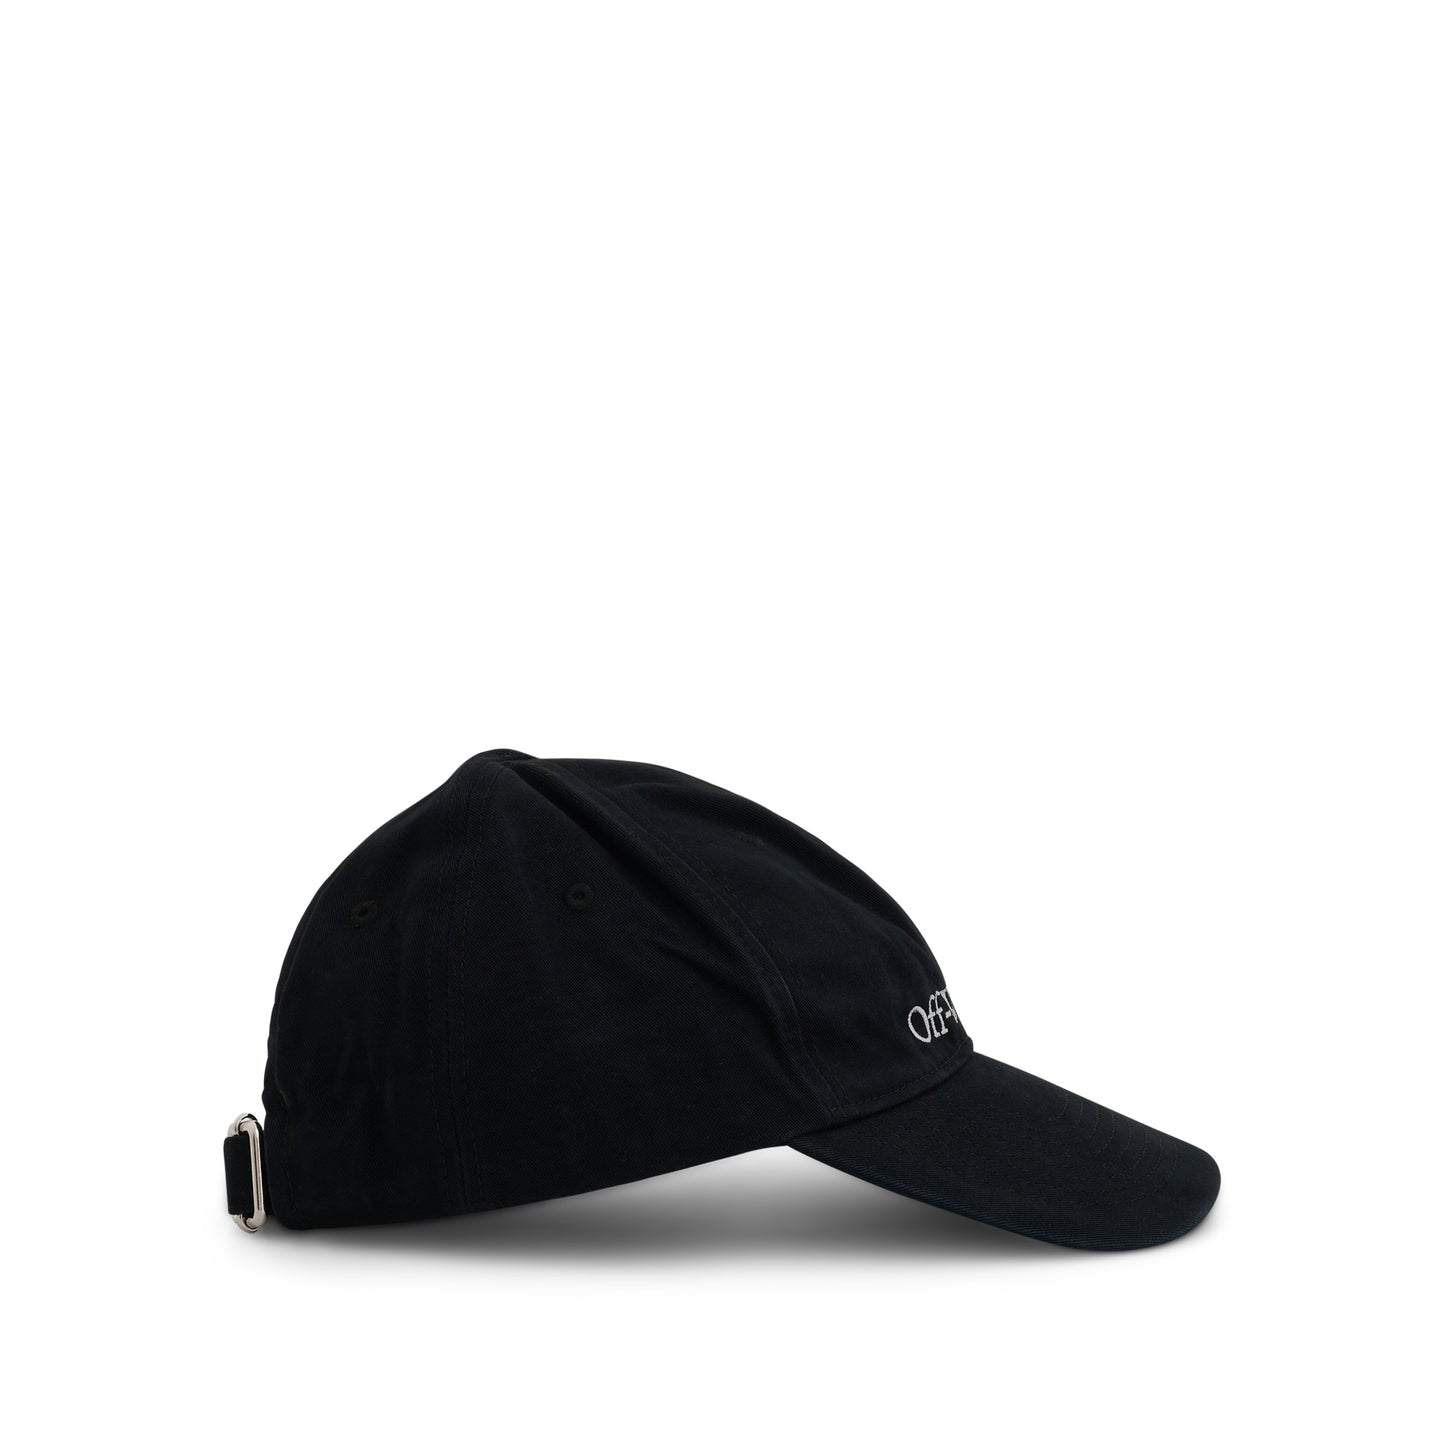 Bookish Baseball Cap in Black